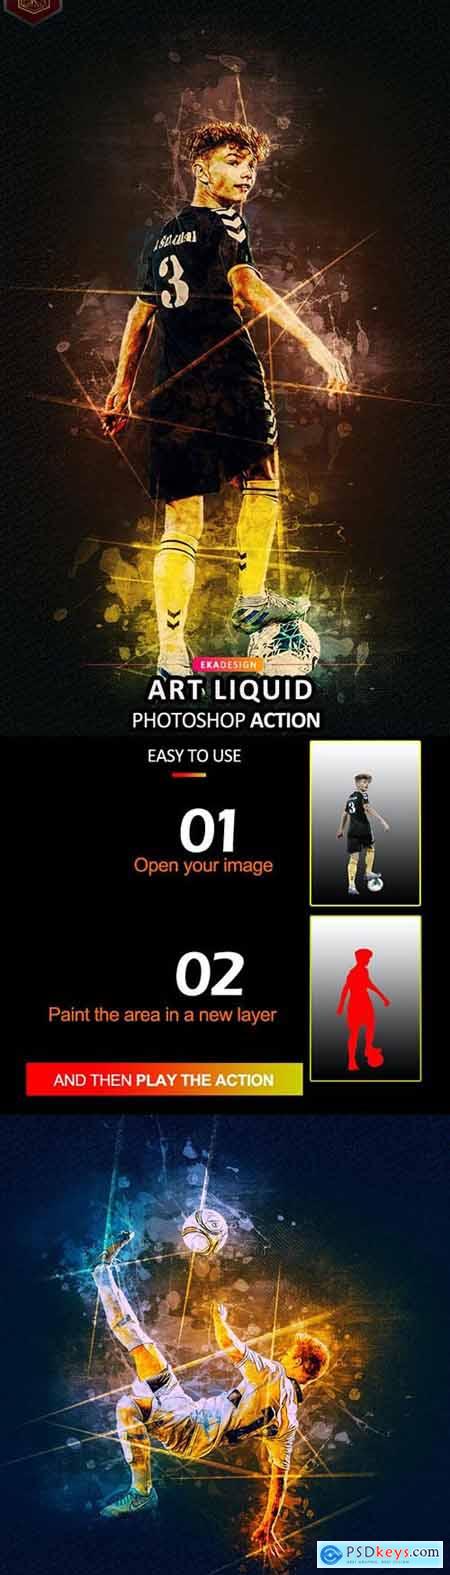 Art Liquid Photoshop Action 35428618